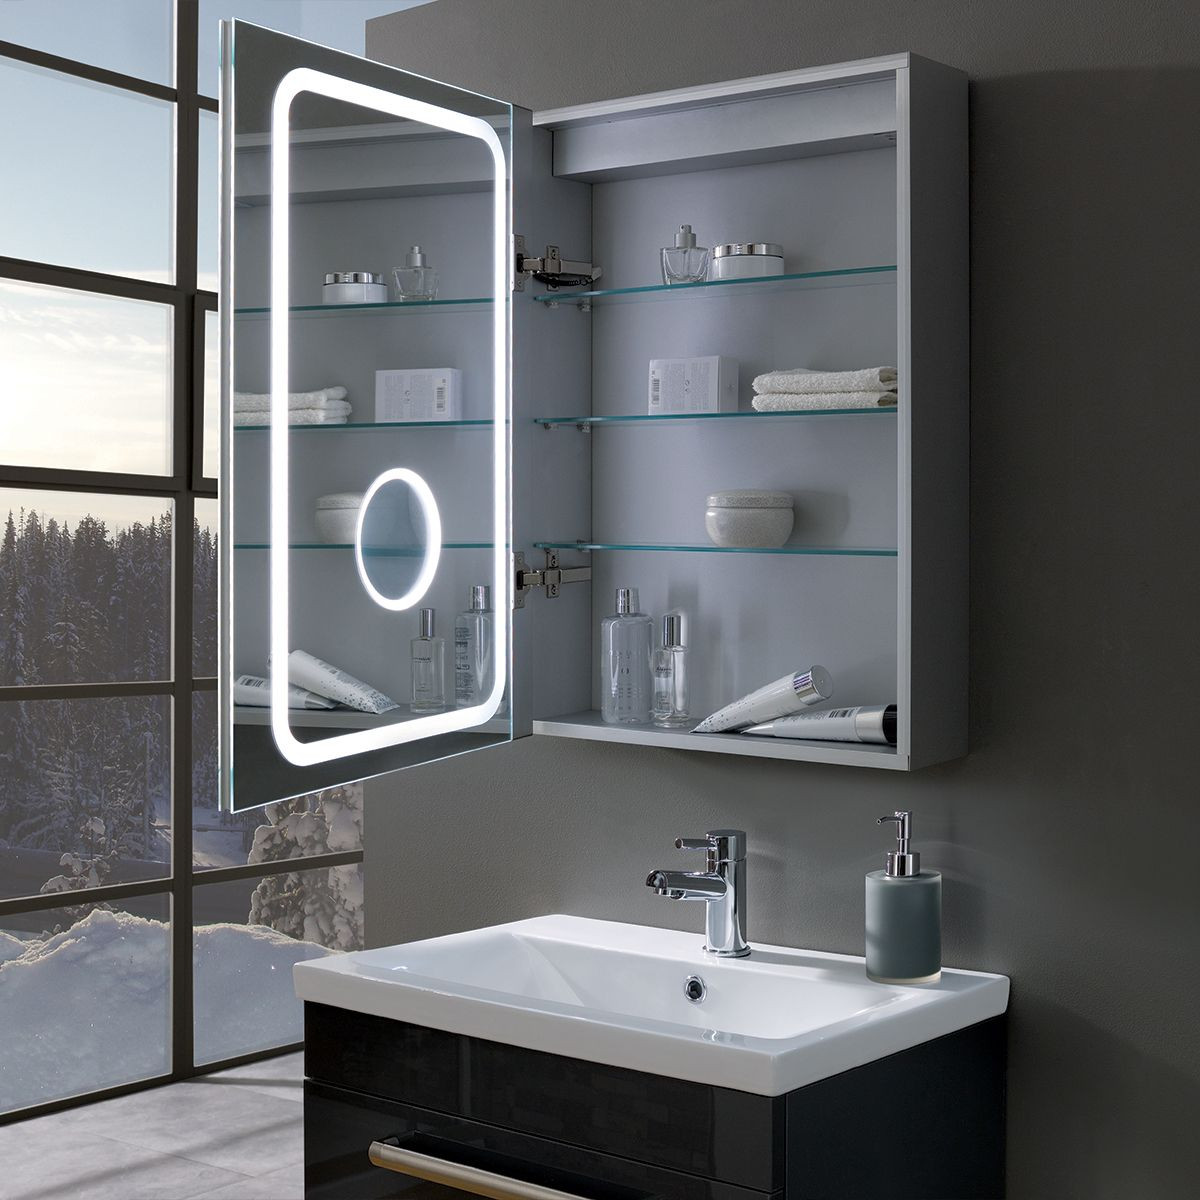 Bathroom Mirror Cabinet With Light
 Glee LED Illuminated Mirror Cabinet